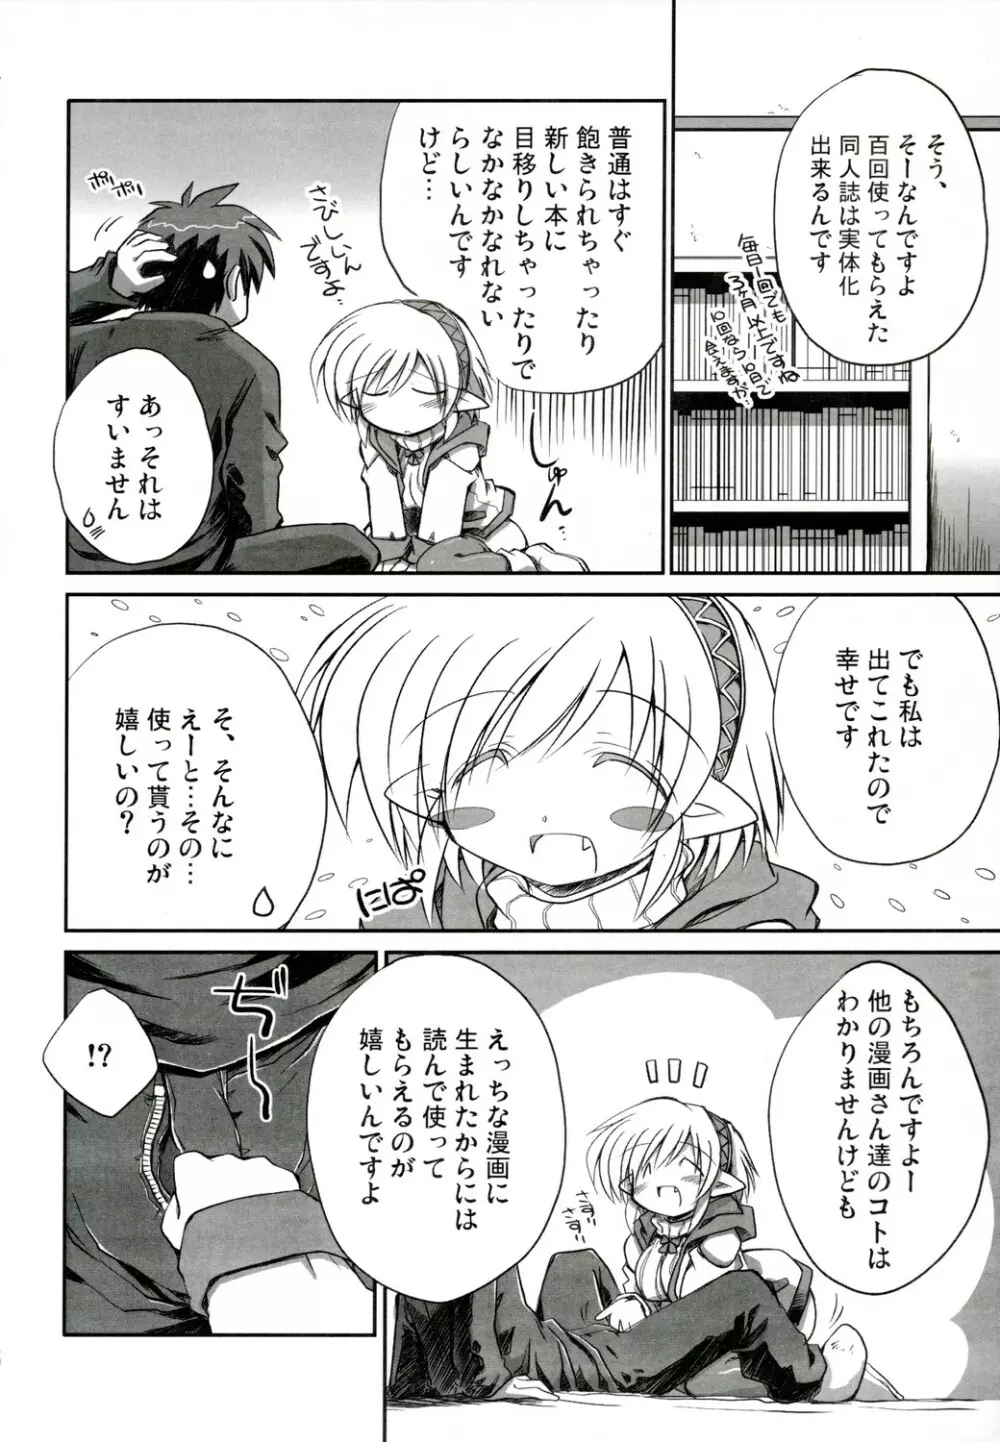 intermission 2 -同人誌の妖精さん ver.2- 8ページ